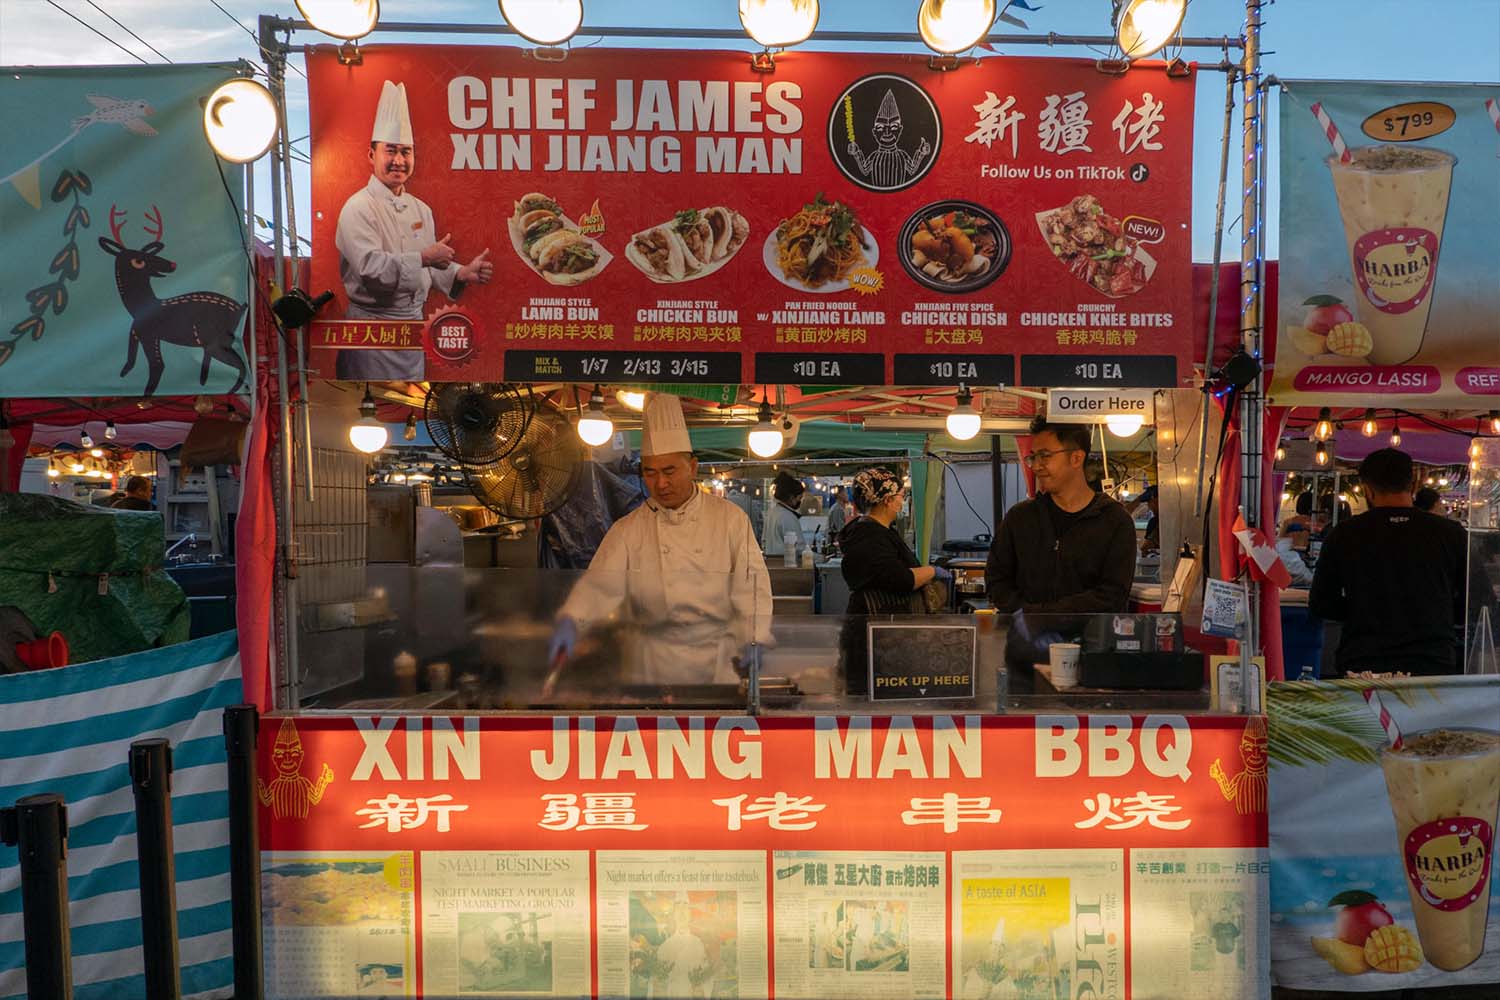 Chef James Xin Jiang Man